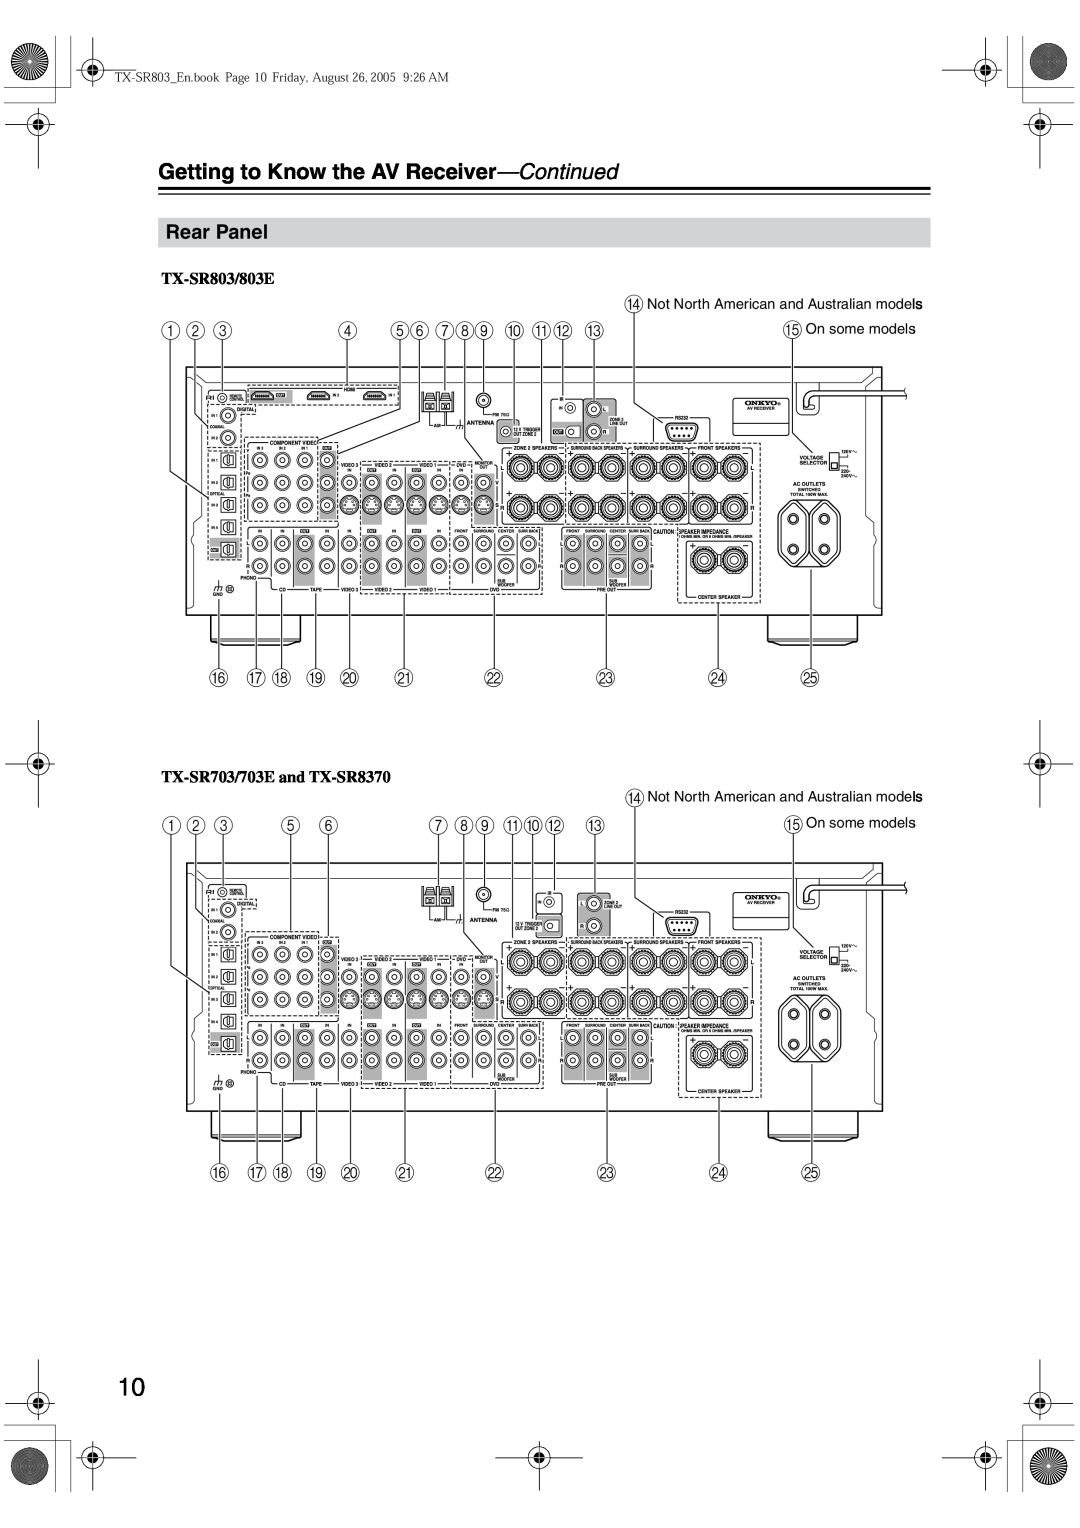 Onkyo TX-SR8370, TX-SR803, TX-SR703E, TX-SR 803E instruction manual Rear Panel, Getting to Know the AV Receiver—Continued 